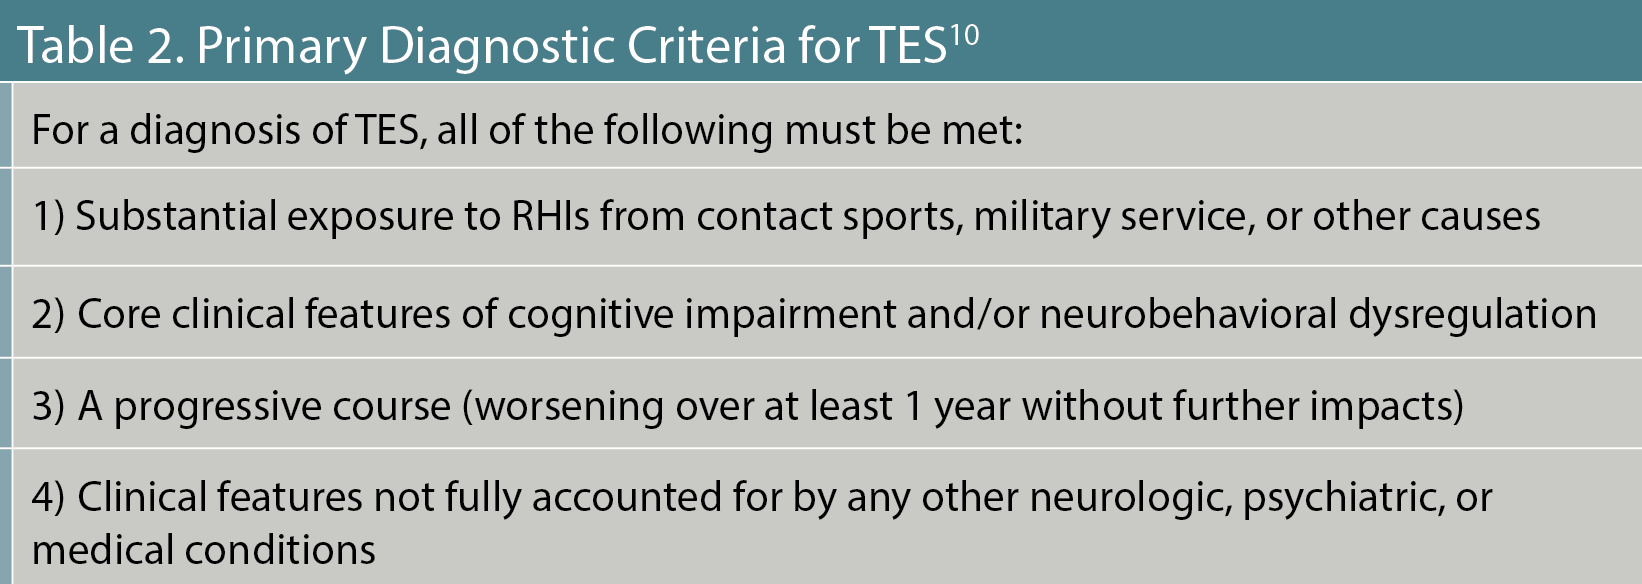 Table 2. Primary Diagnostic Criteria for TES